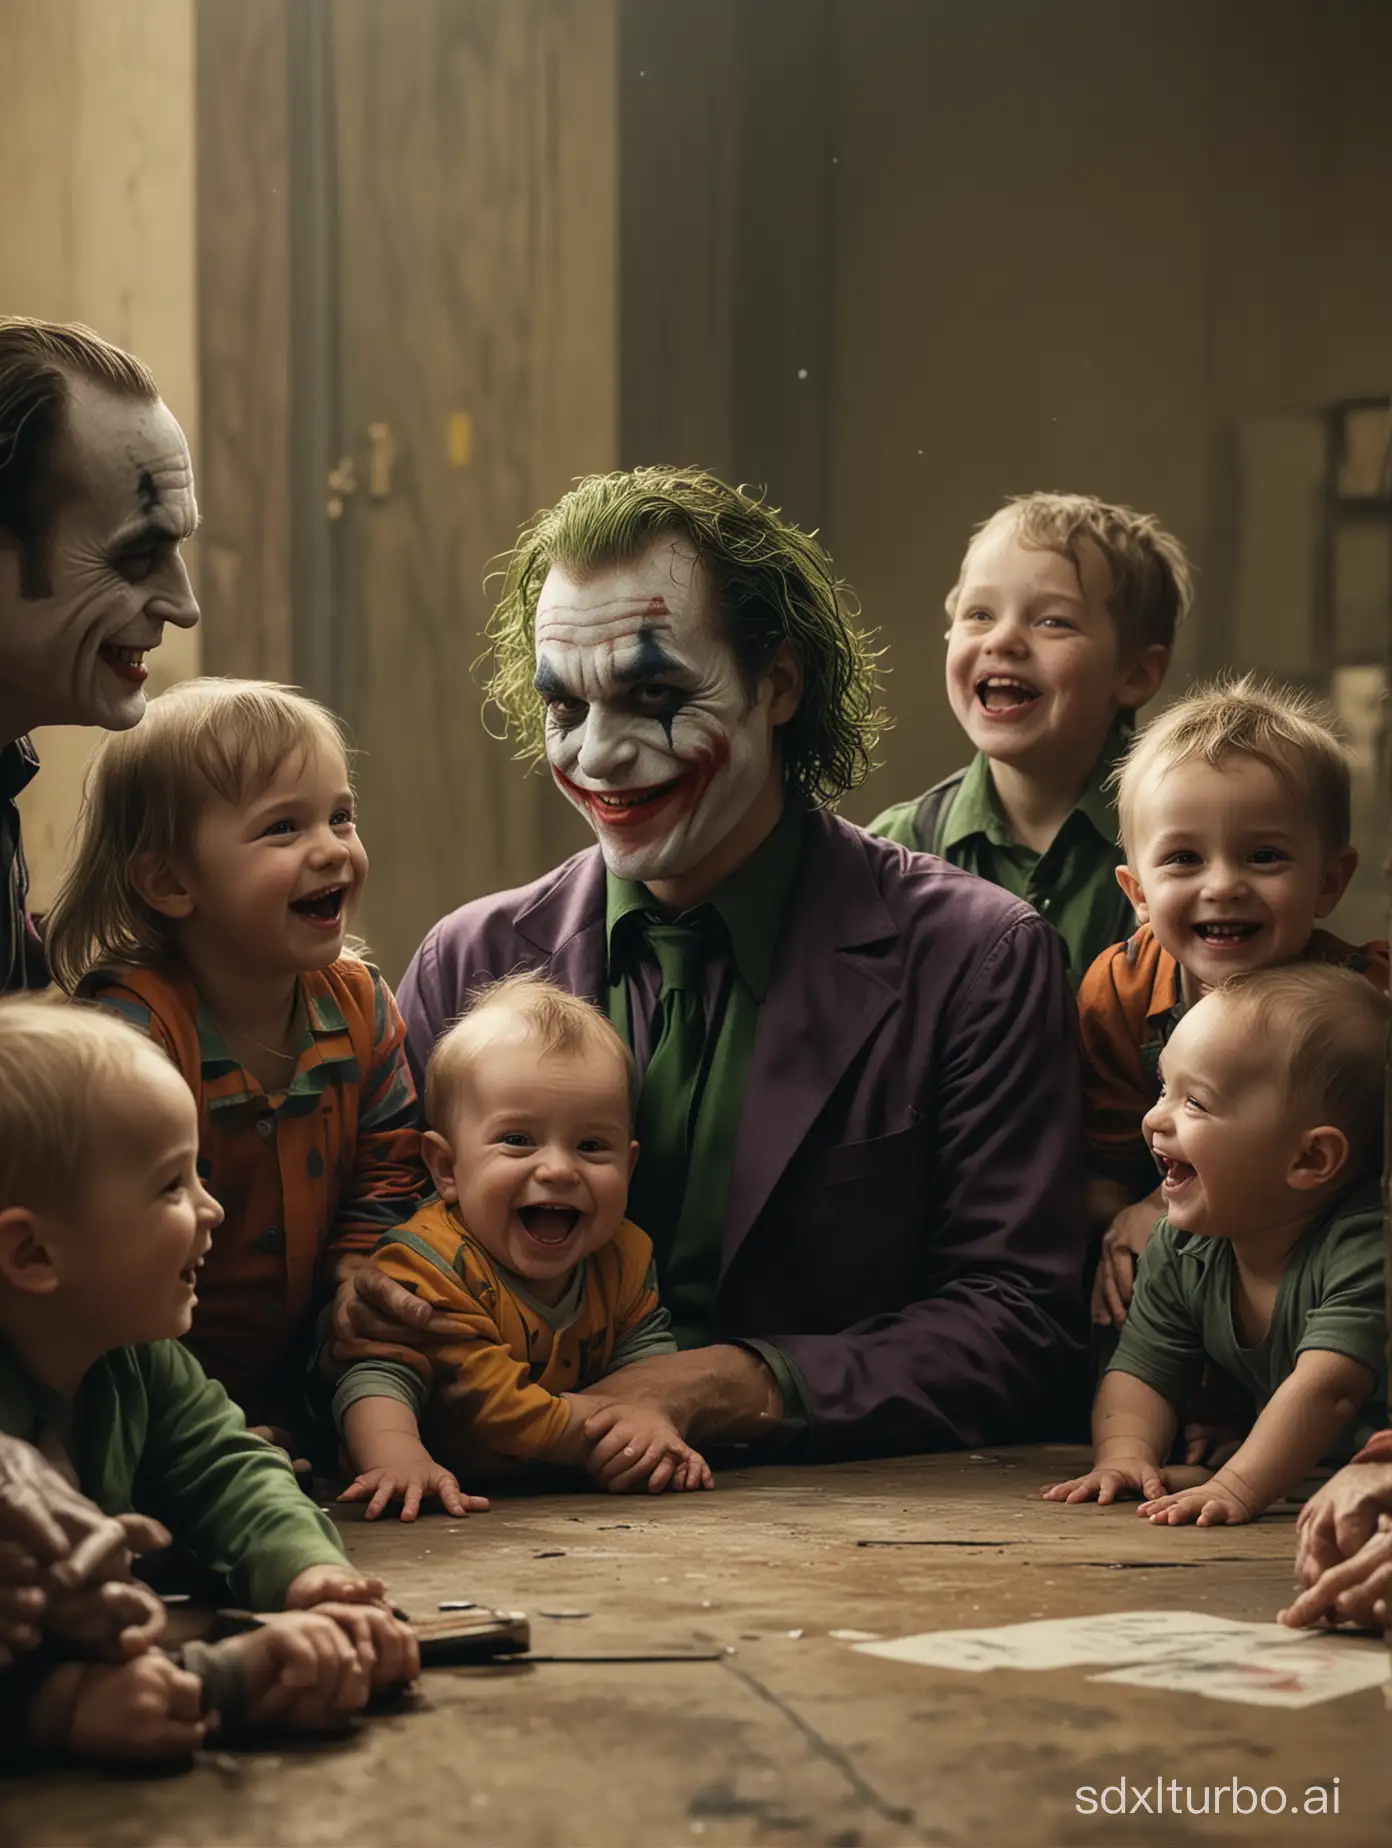 Joyful-Interaction-Babies-and-the-Joker-Sharing-Smiles-in-UltraFine-8K-Quality-Art